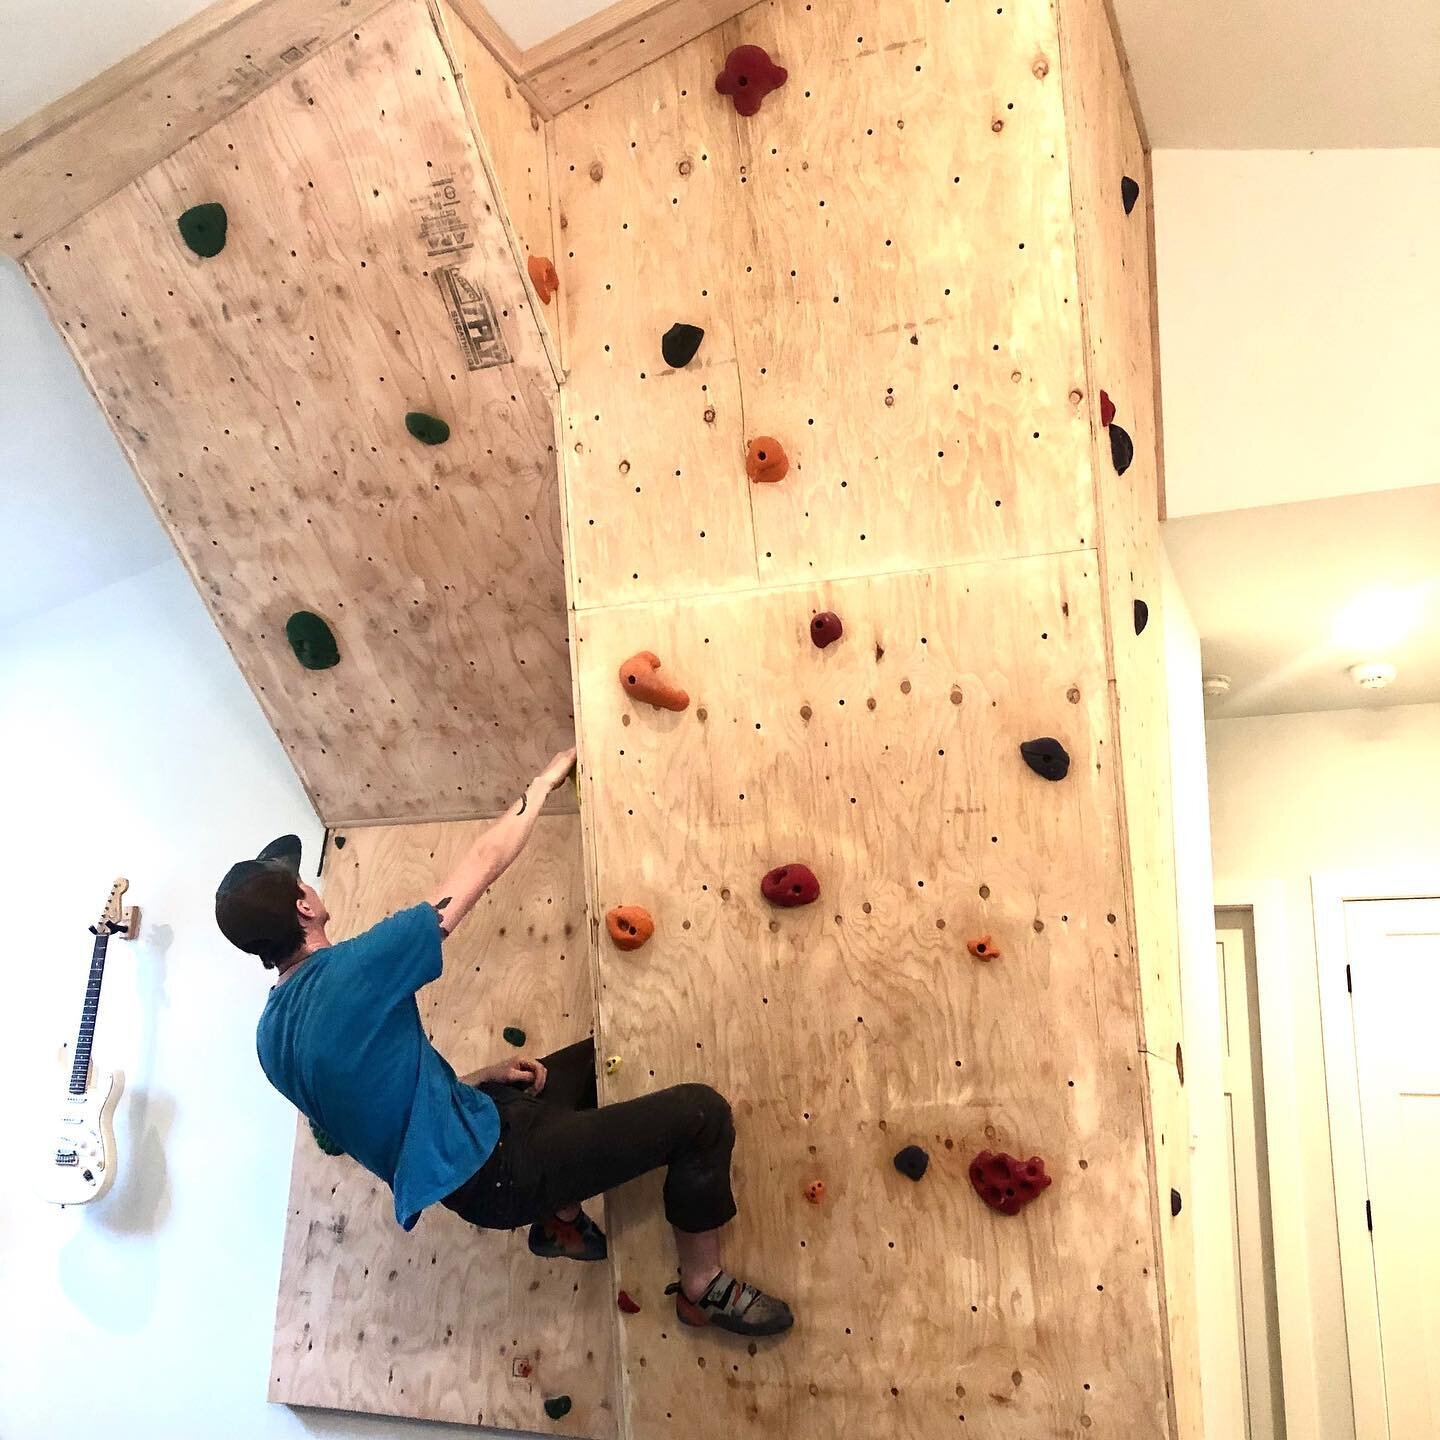 Indoor climbing wall

#climbing #homeclimbinggym #homerenovation #carpentry #woodworking